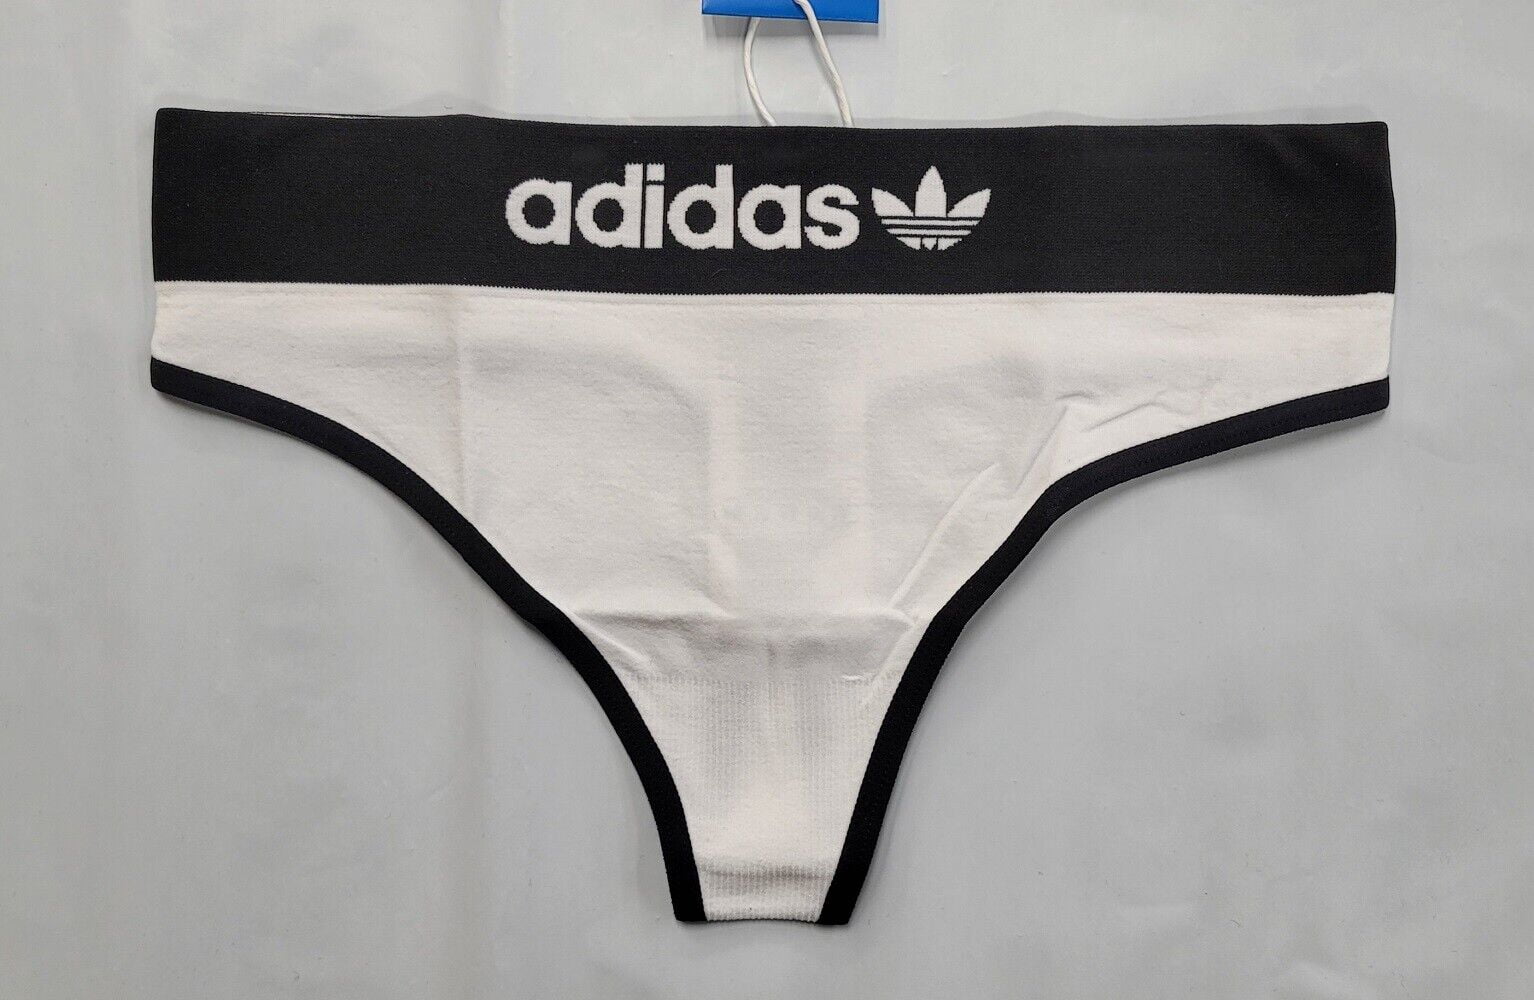 Adidas Women's Seamless Thong Underwear (Black 2, Small) - 4A1H64